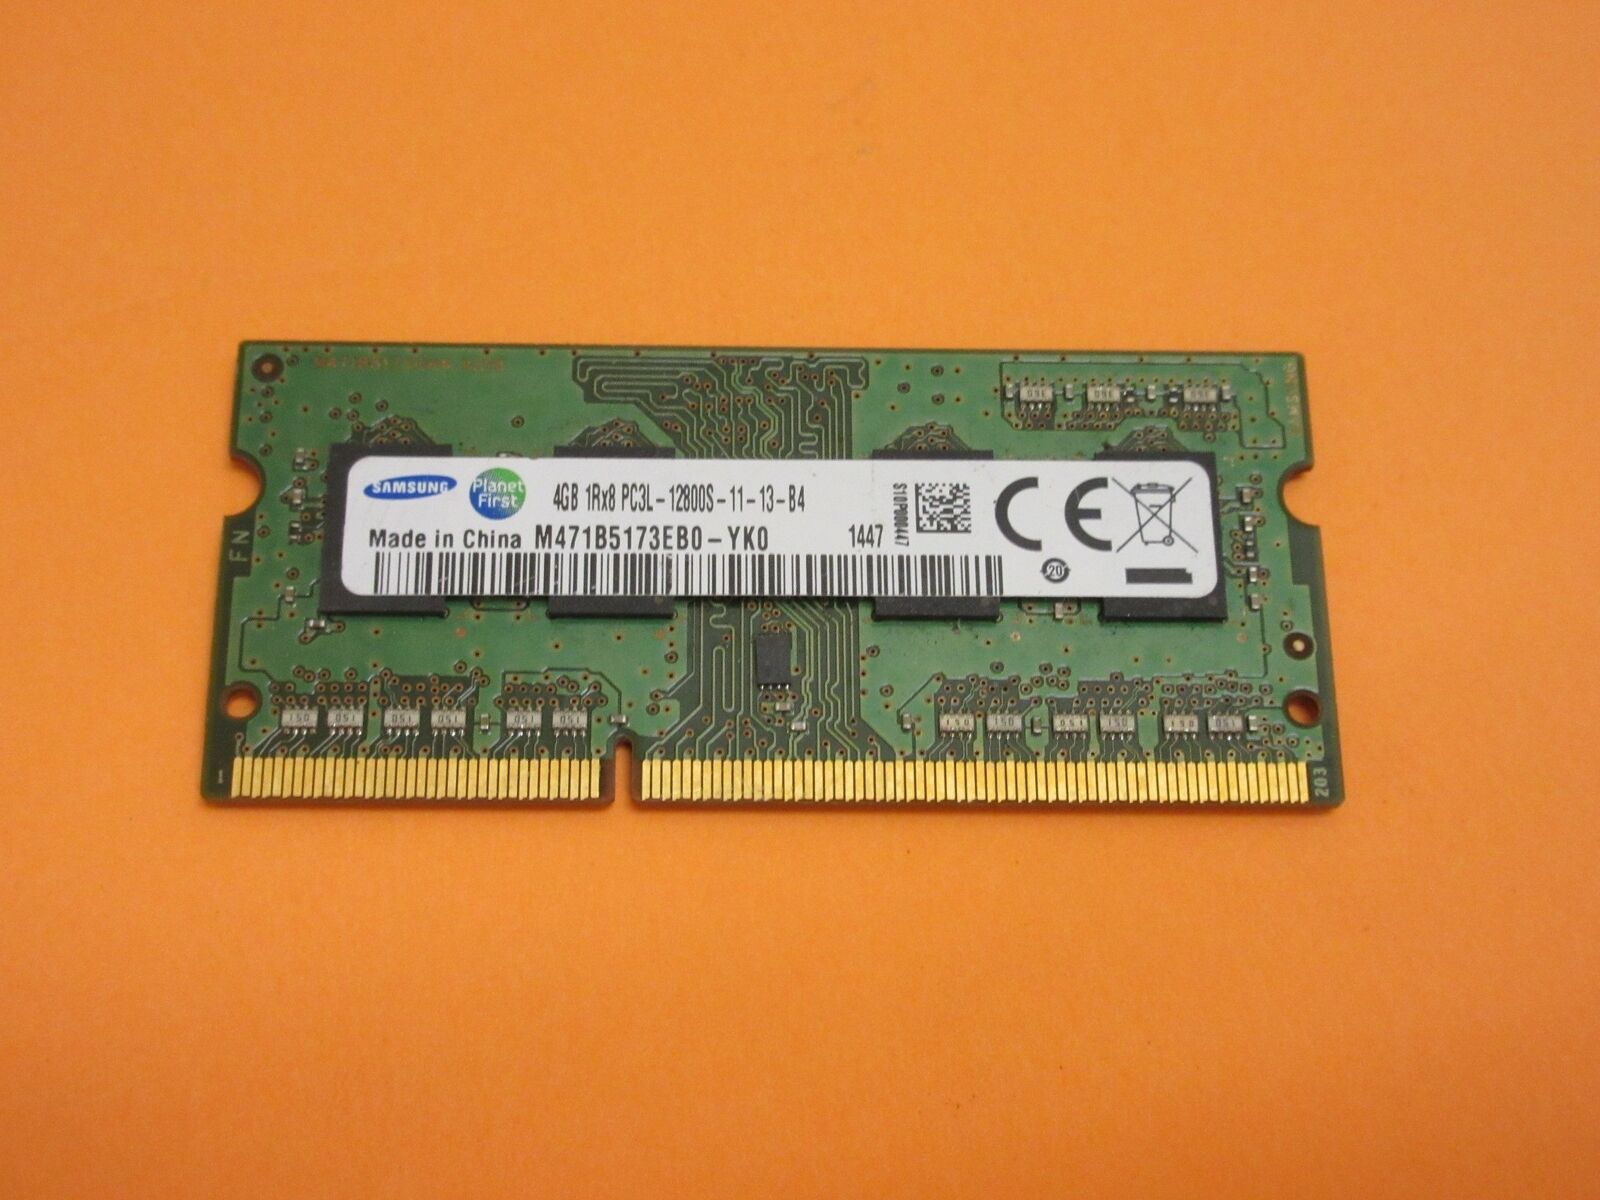 Samsung 4GB (1-Stick) PC3L-12800 DDR3 1600 Laptop SODIMM Memory M471B5173EB0-YK0